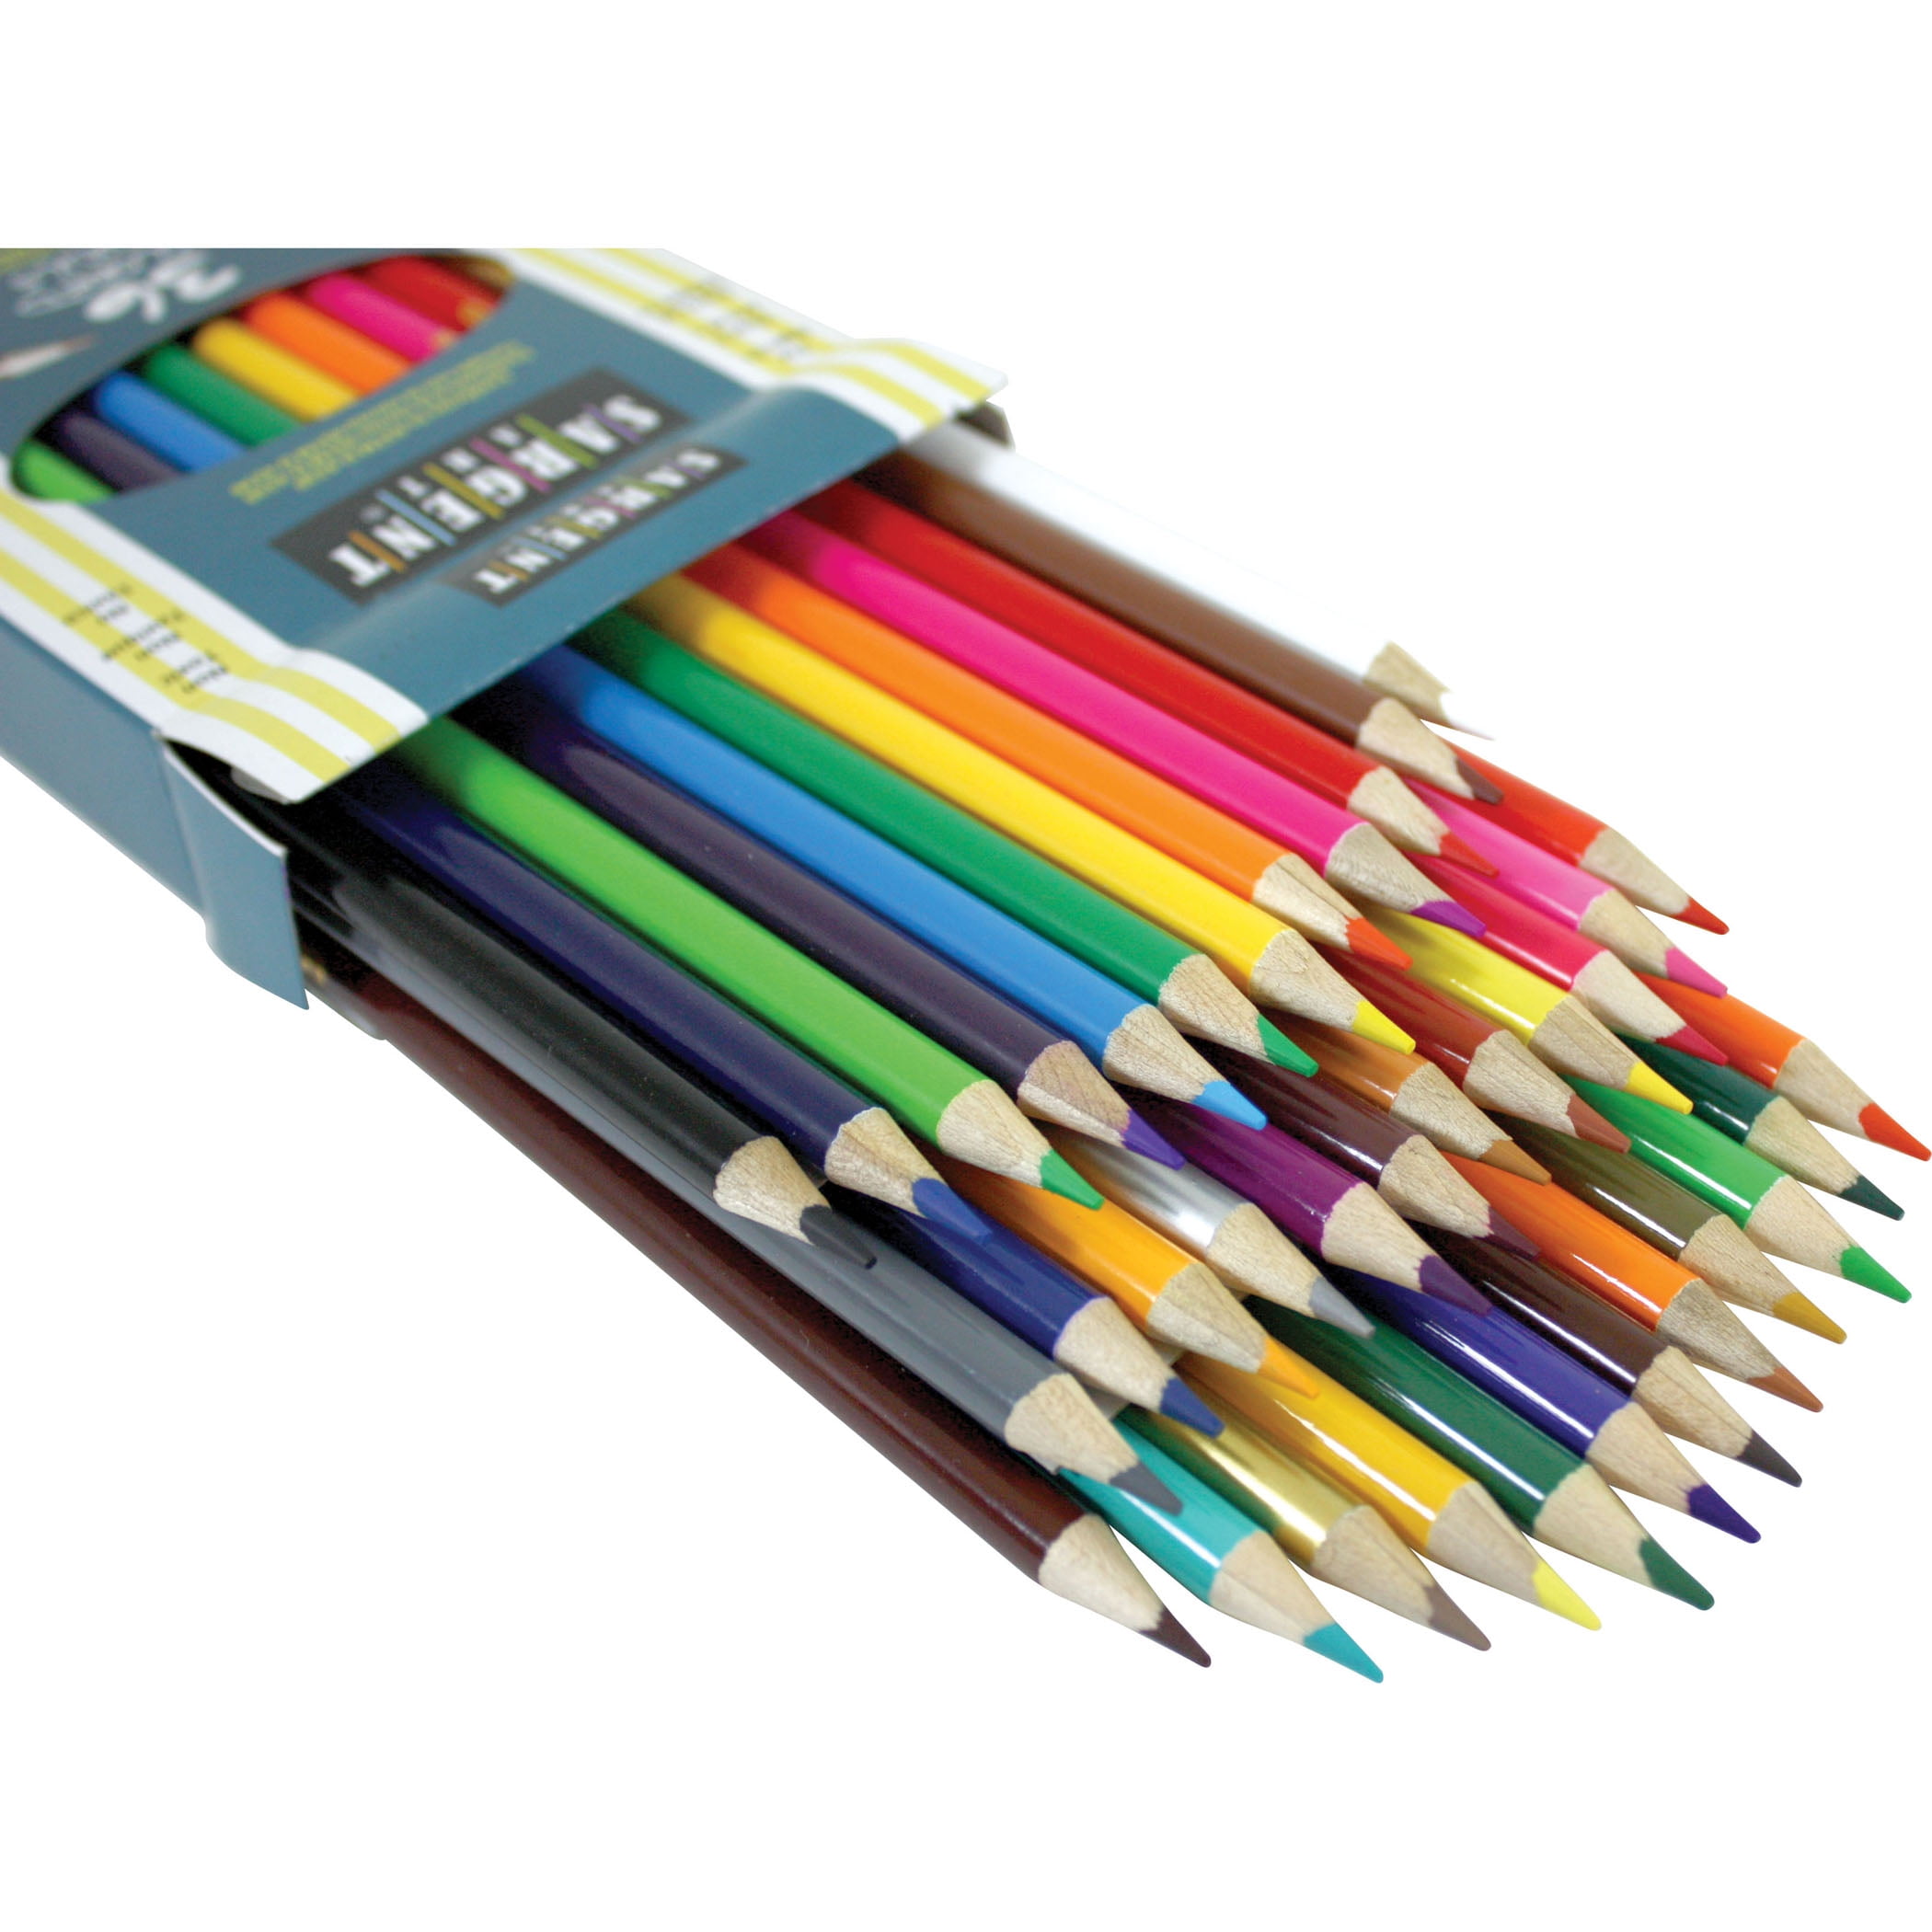 Sargent Art 22-7203 Assorted Erasable Colored Pencils, 12 Count